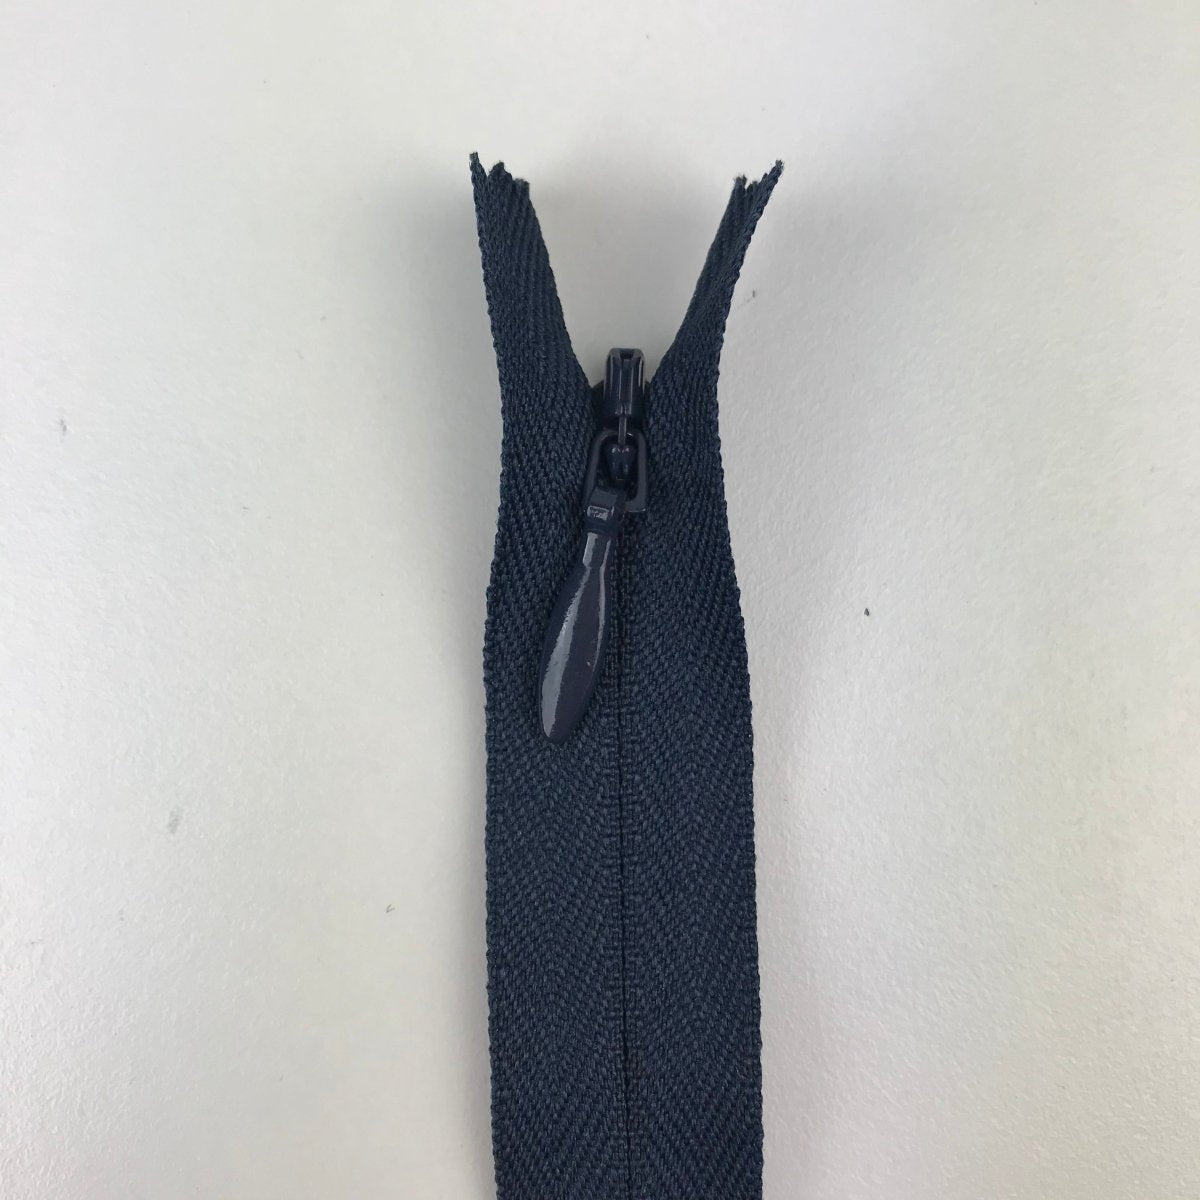 YKK Zipper - Invisible - 41cm (16") - Sewing Gem